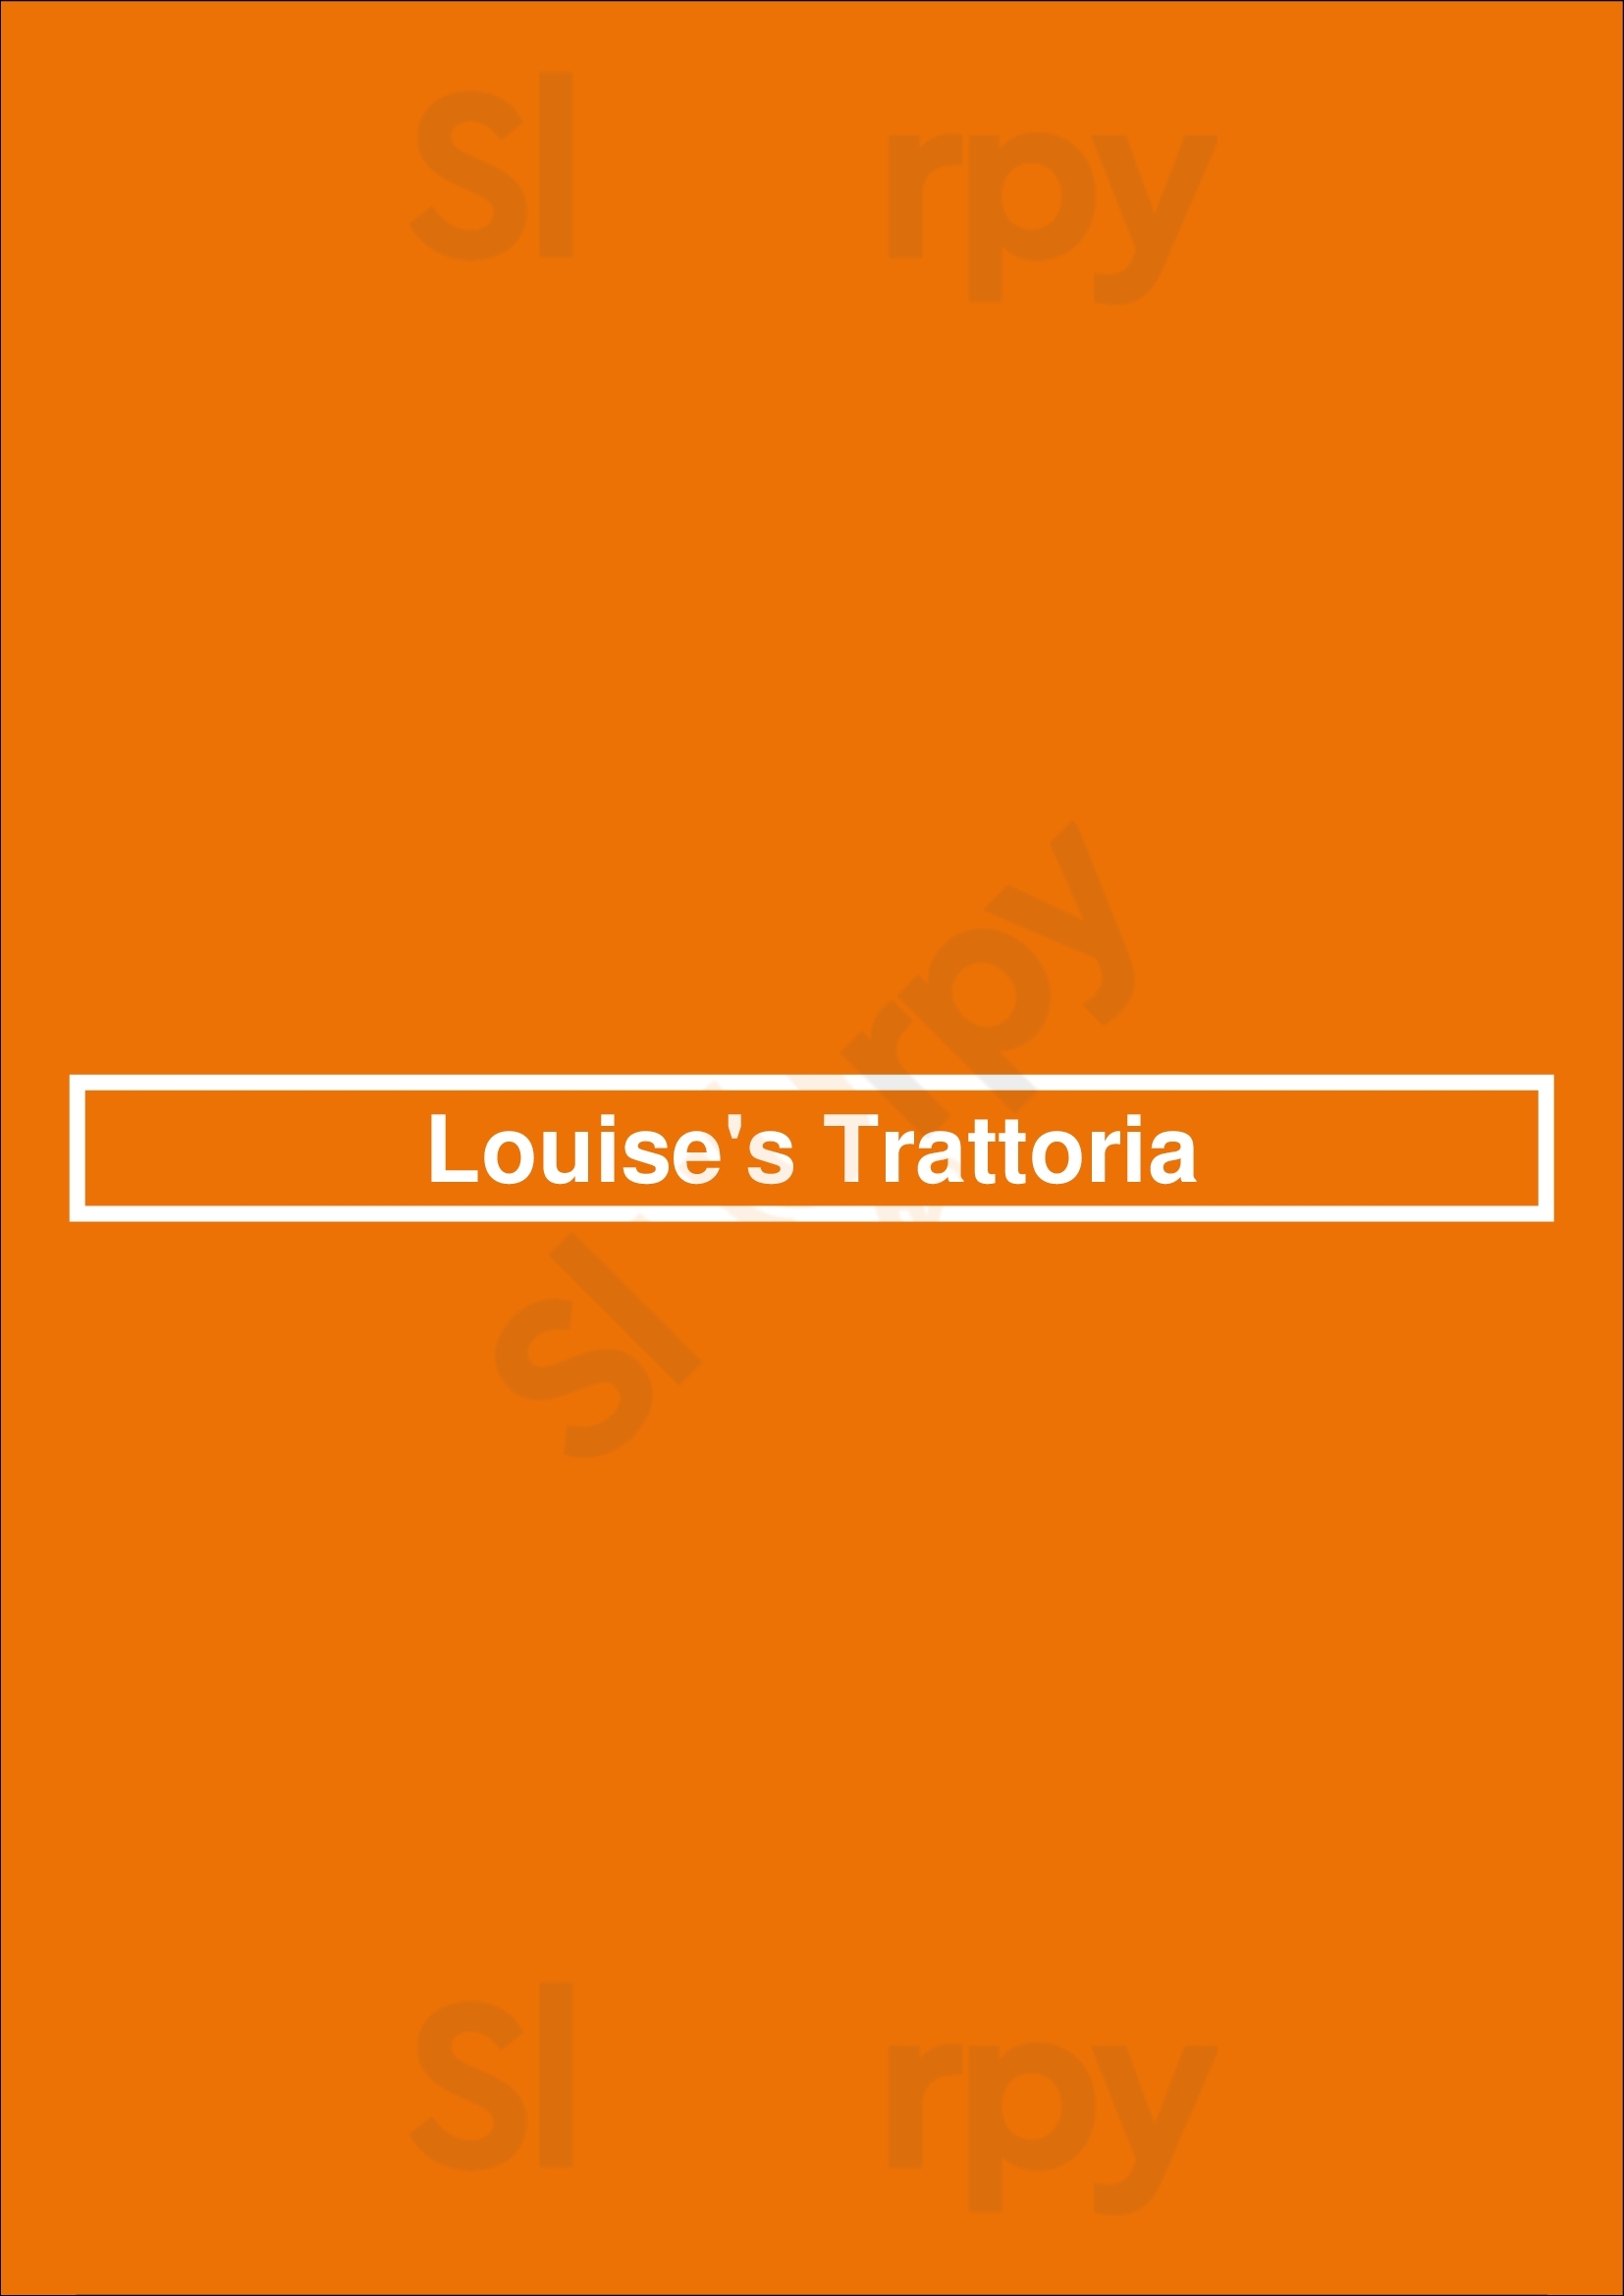 Louise's Trattoria Los Angeles Menu - 1